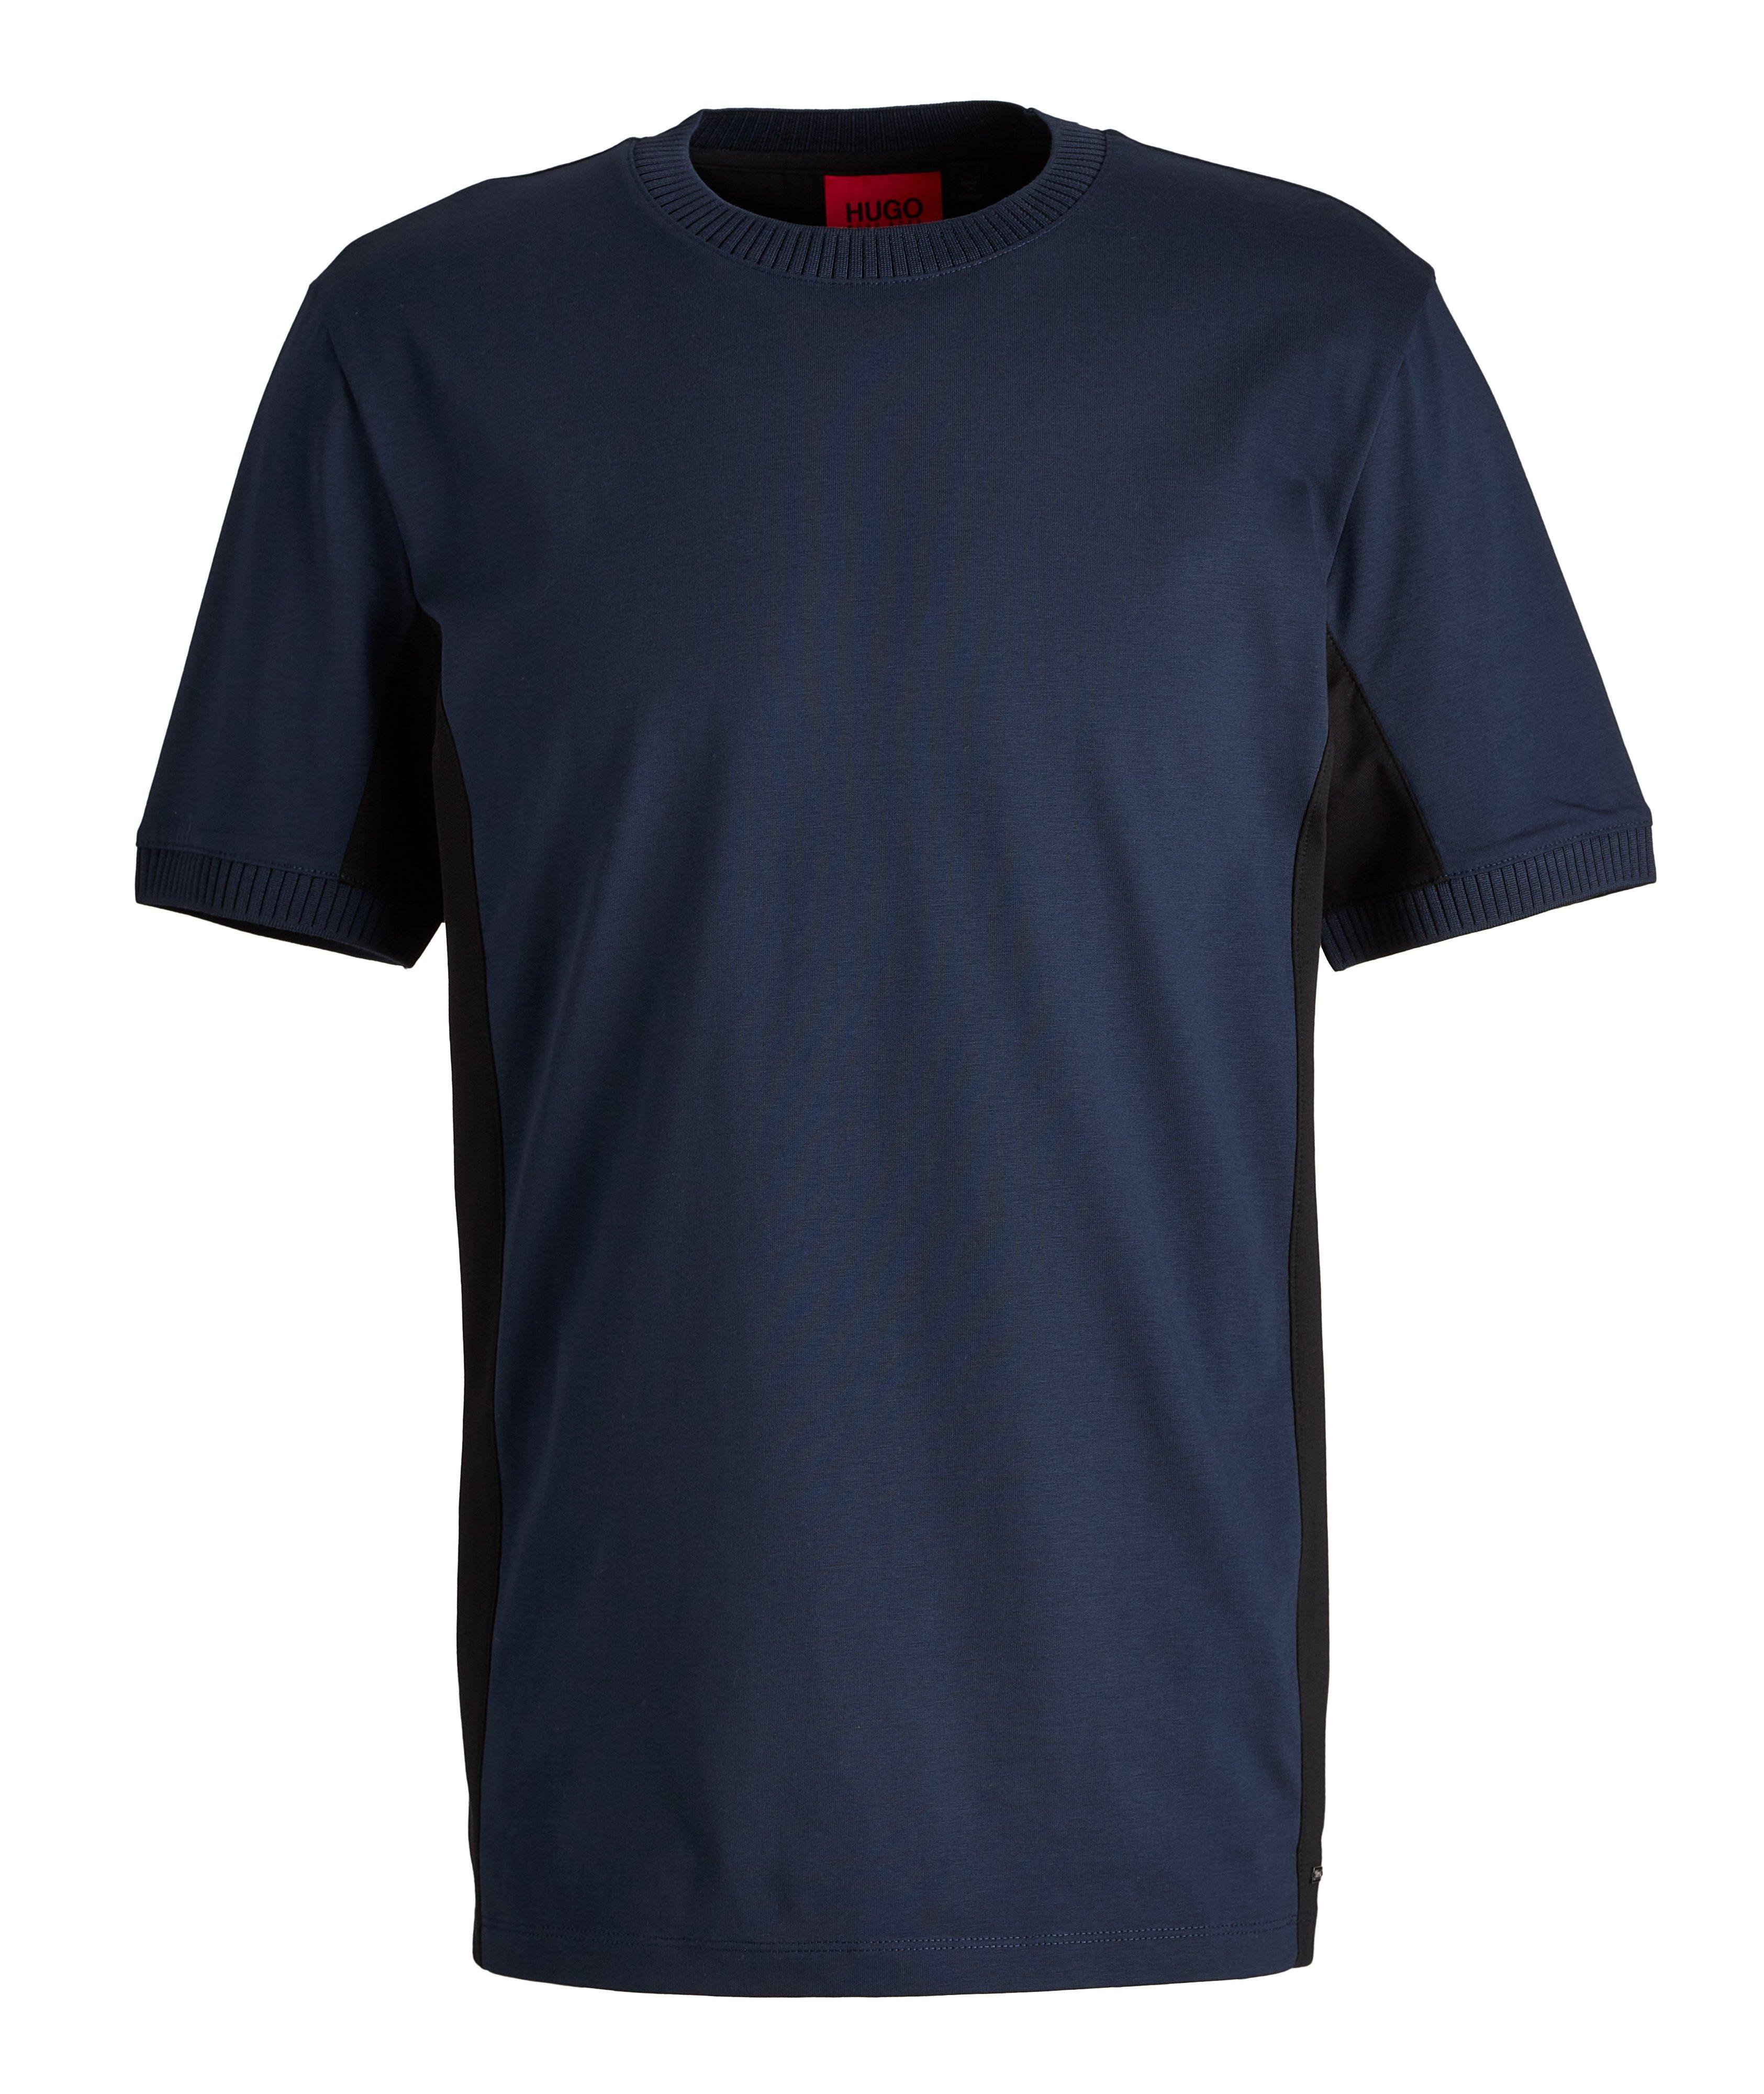 Dinzu Cotton T-Shirt image 0